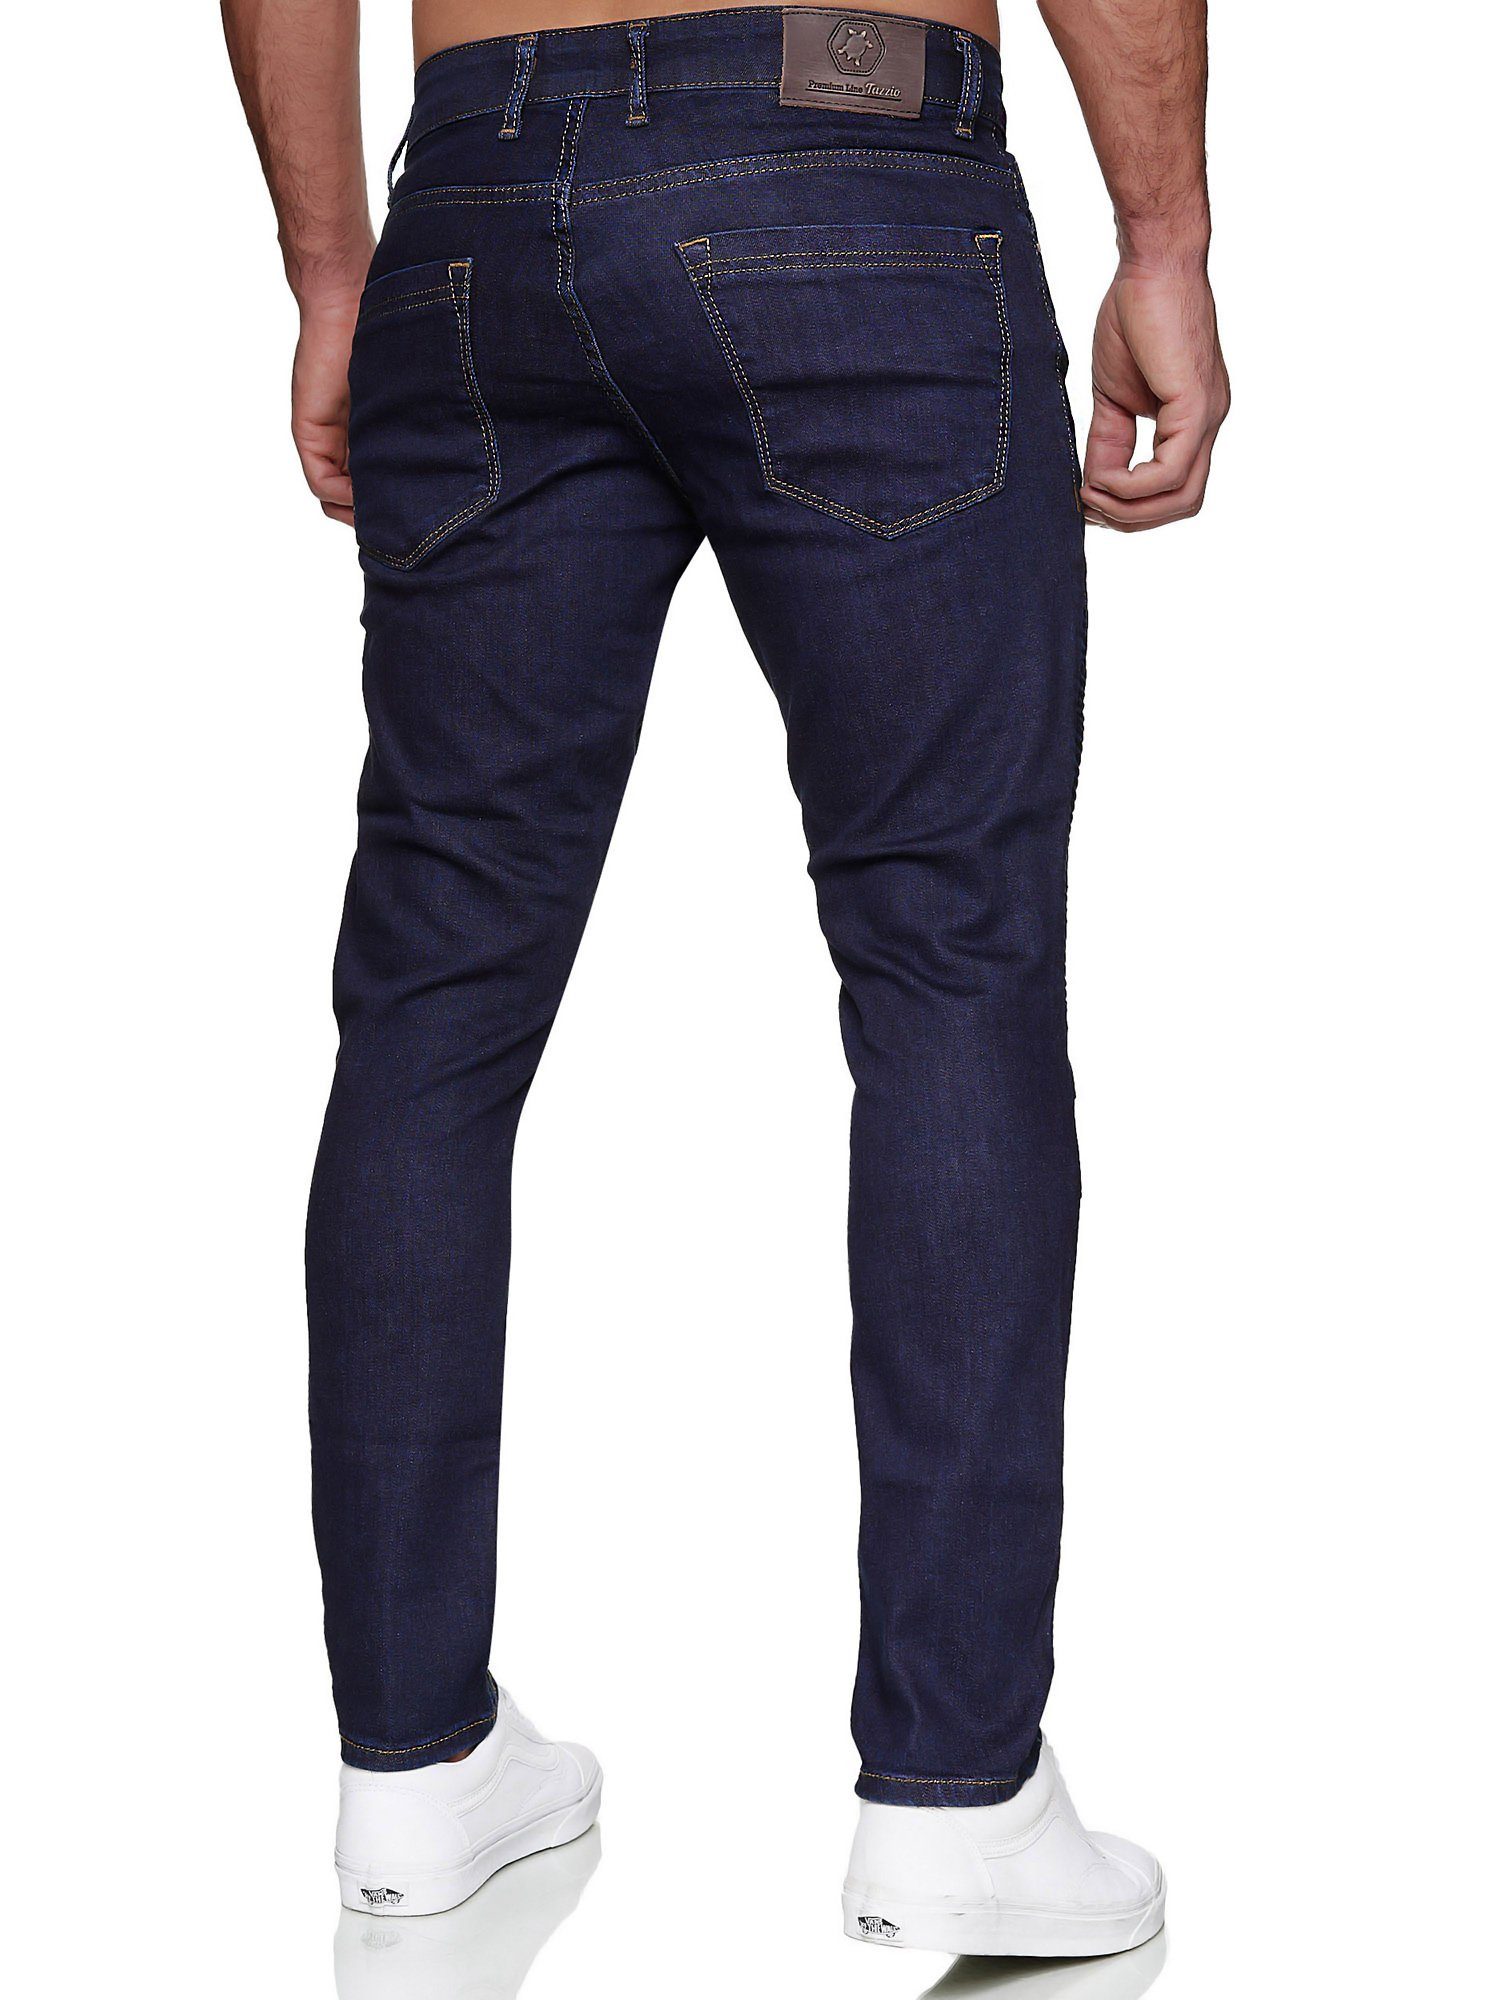 16517 Slim-fit-Jeans cooler dunkelblau Biker-Optik in Tazzio